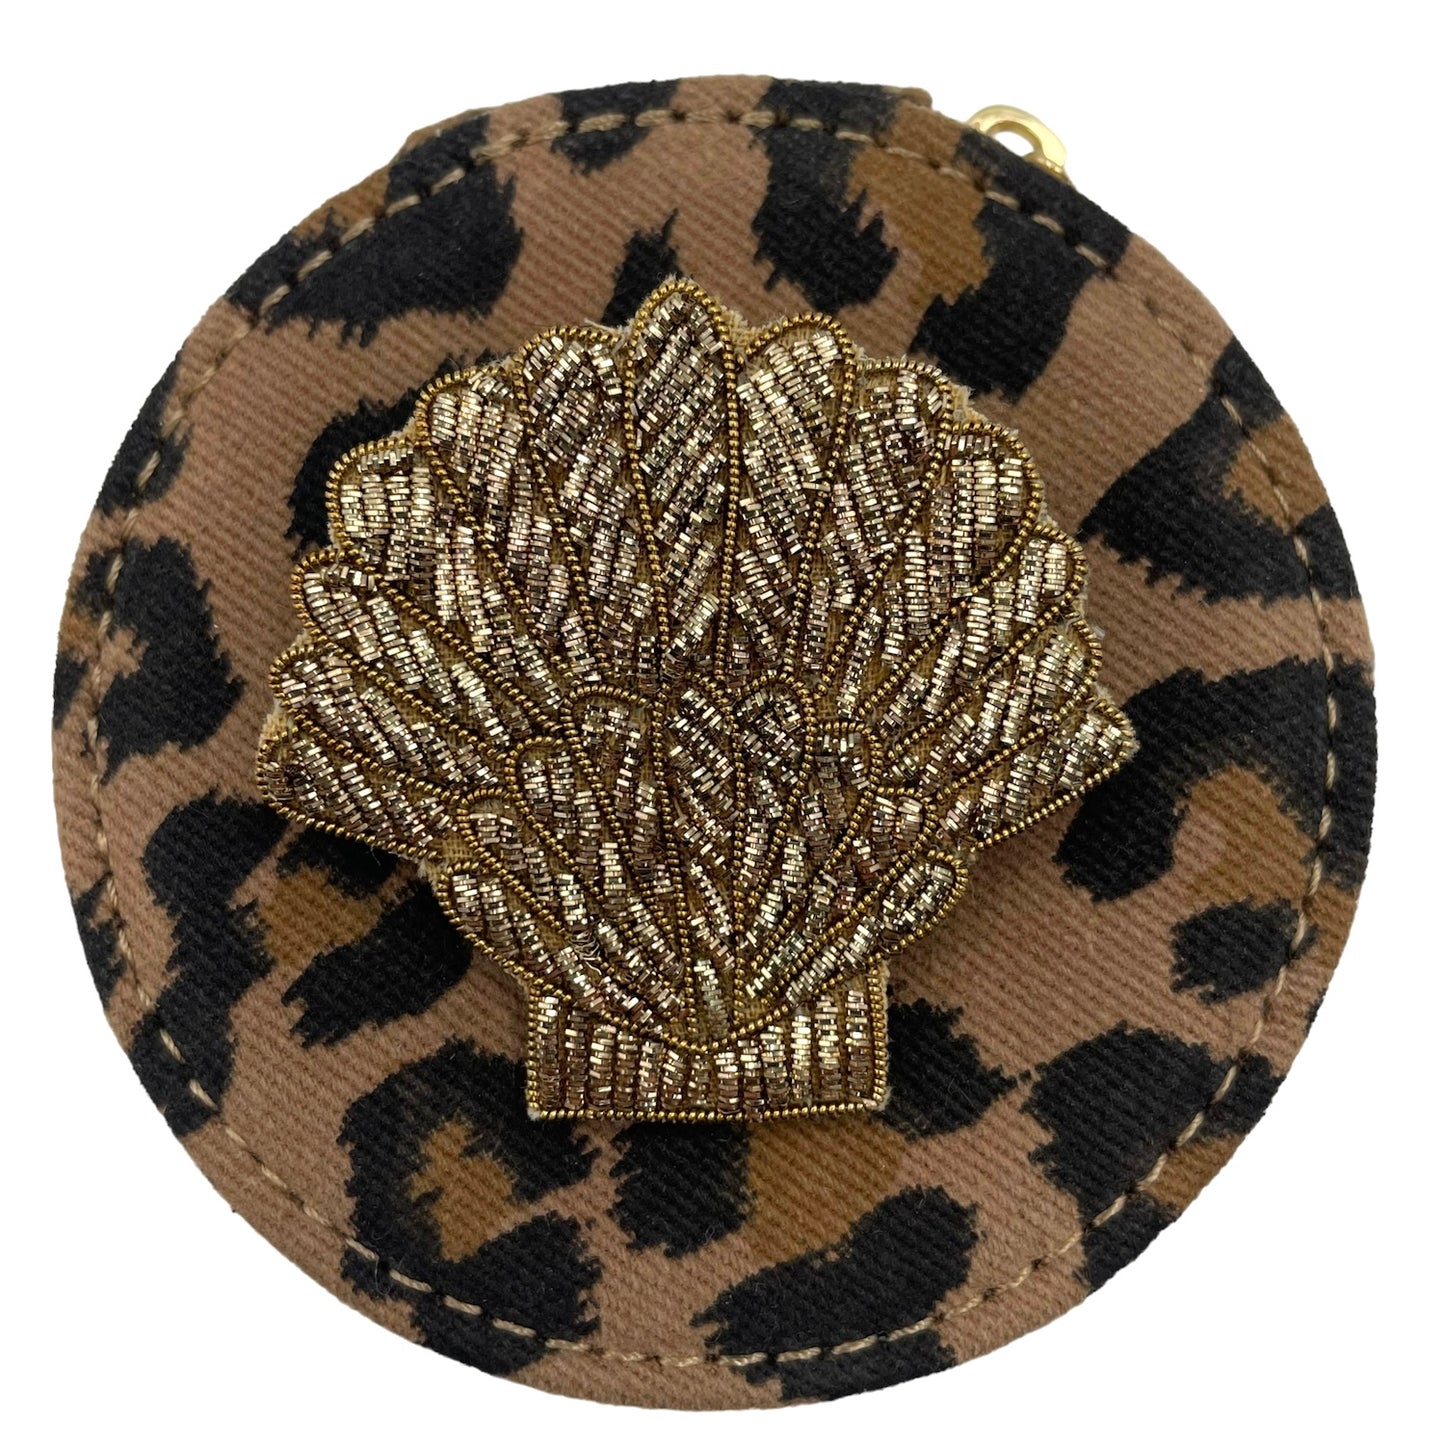 Jewellery travel pot leopard - shell